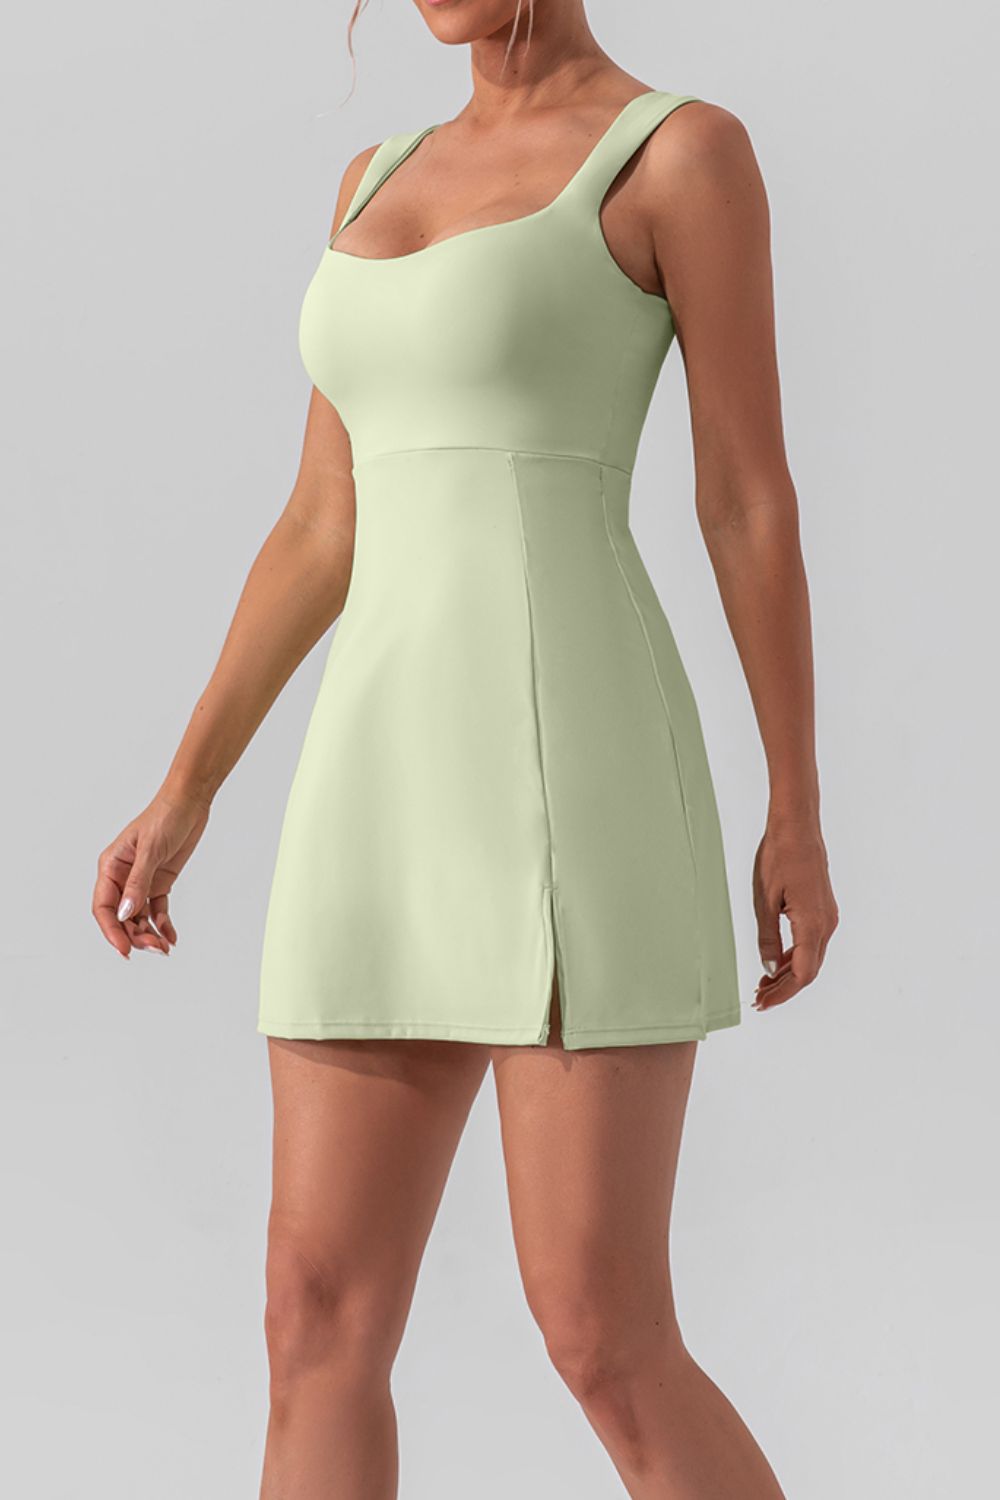 Plain Mini Dress Women's Casual Solid Color Stretchy Square Neck Sleeveless Slit Mini Active Dress